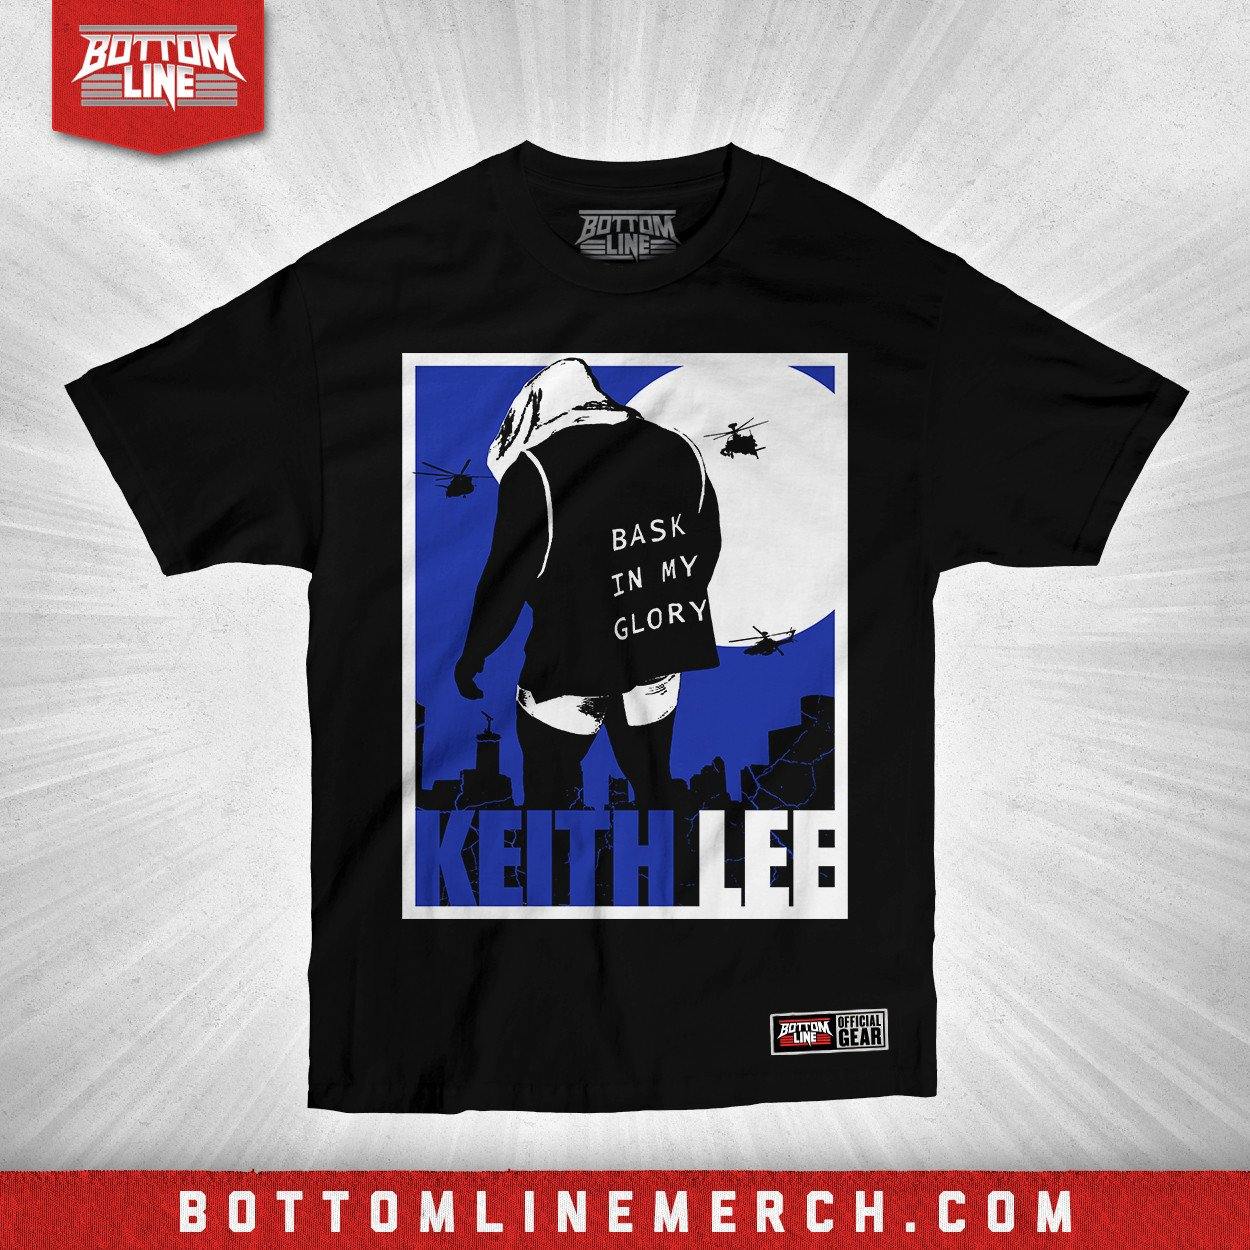 Buy Now – Keith Lee "Keithzilla Royal Blue" Shirt – Wrestler & Wrestling Merch – Bottom Line